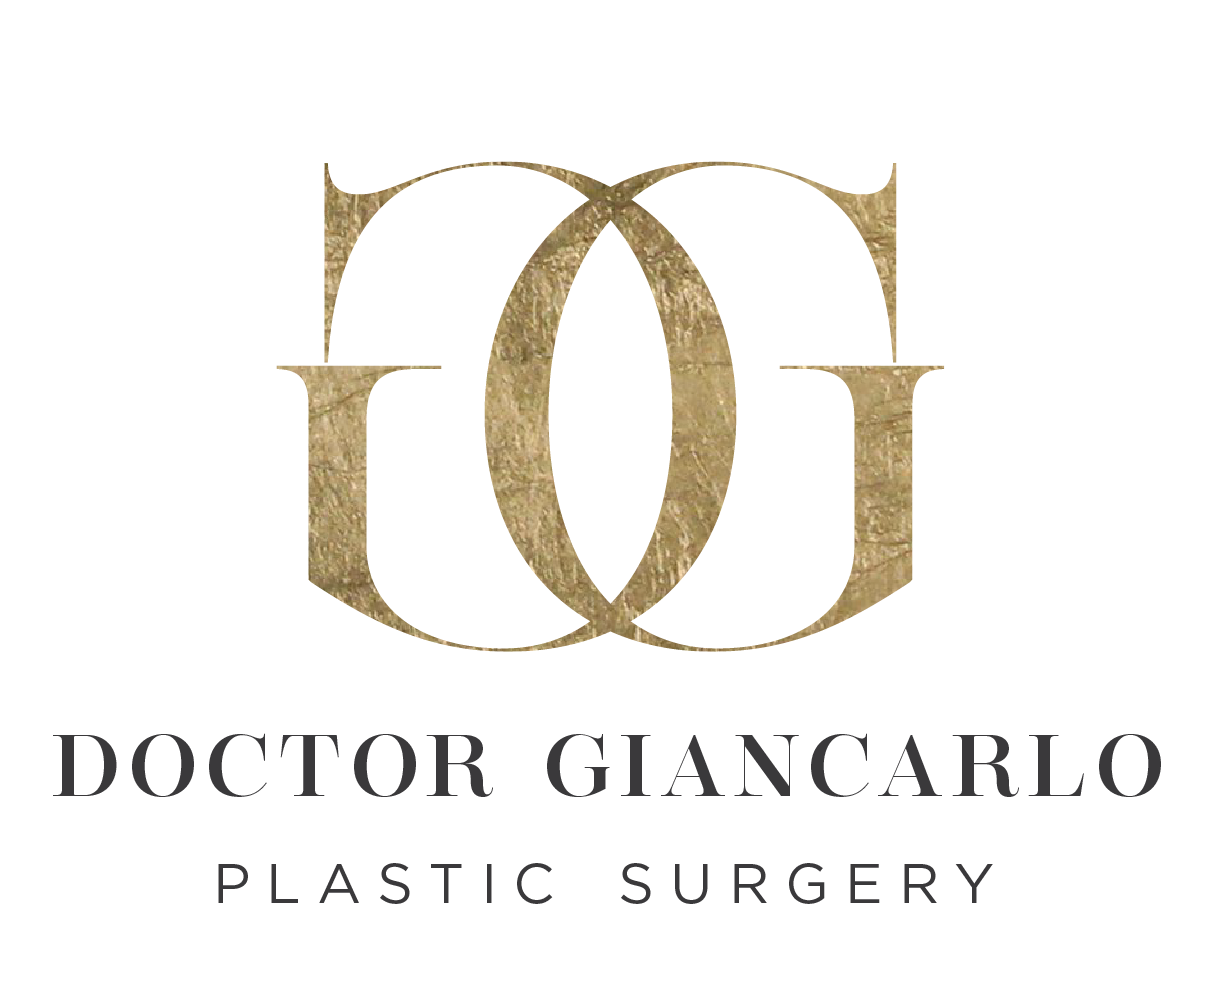 Doctor Giancarlo Plastic Surgery